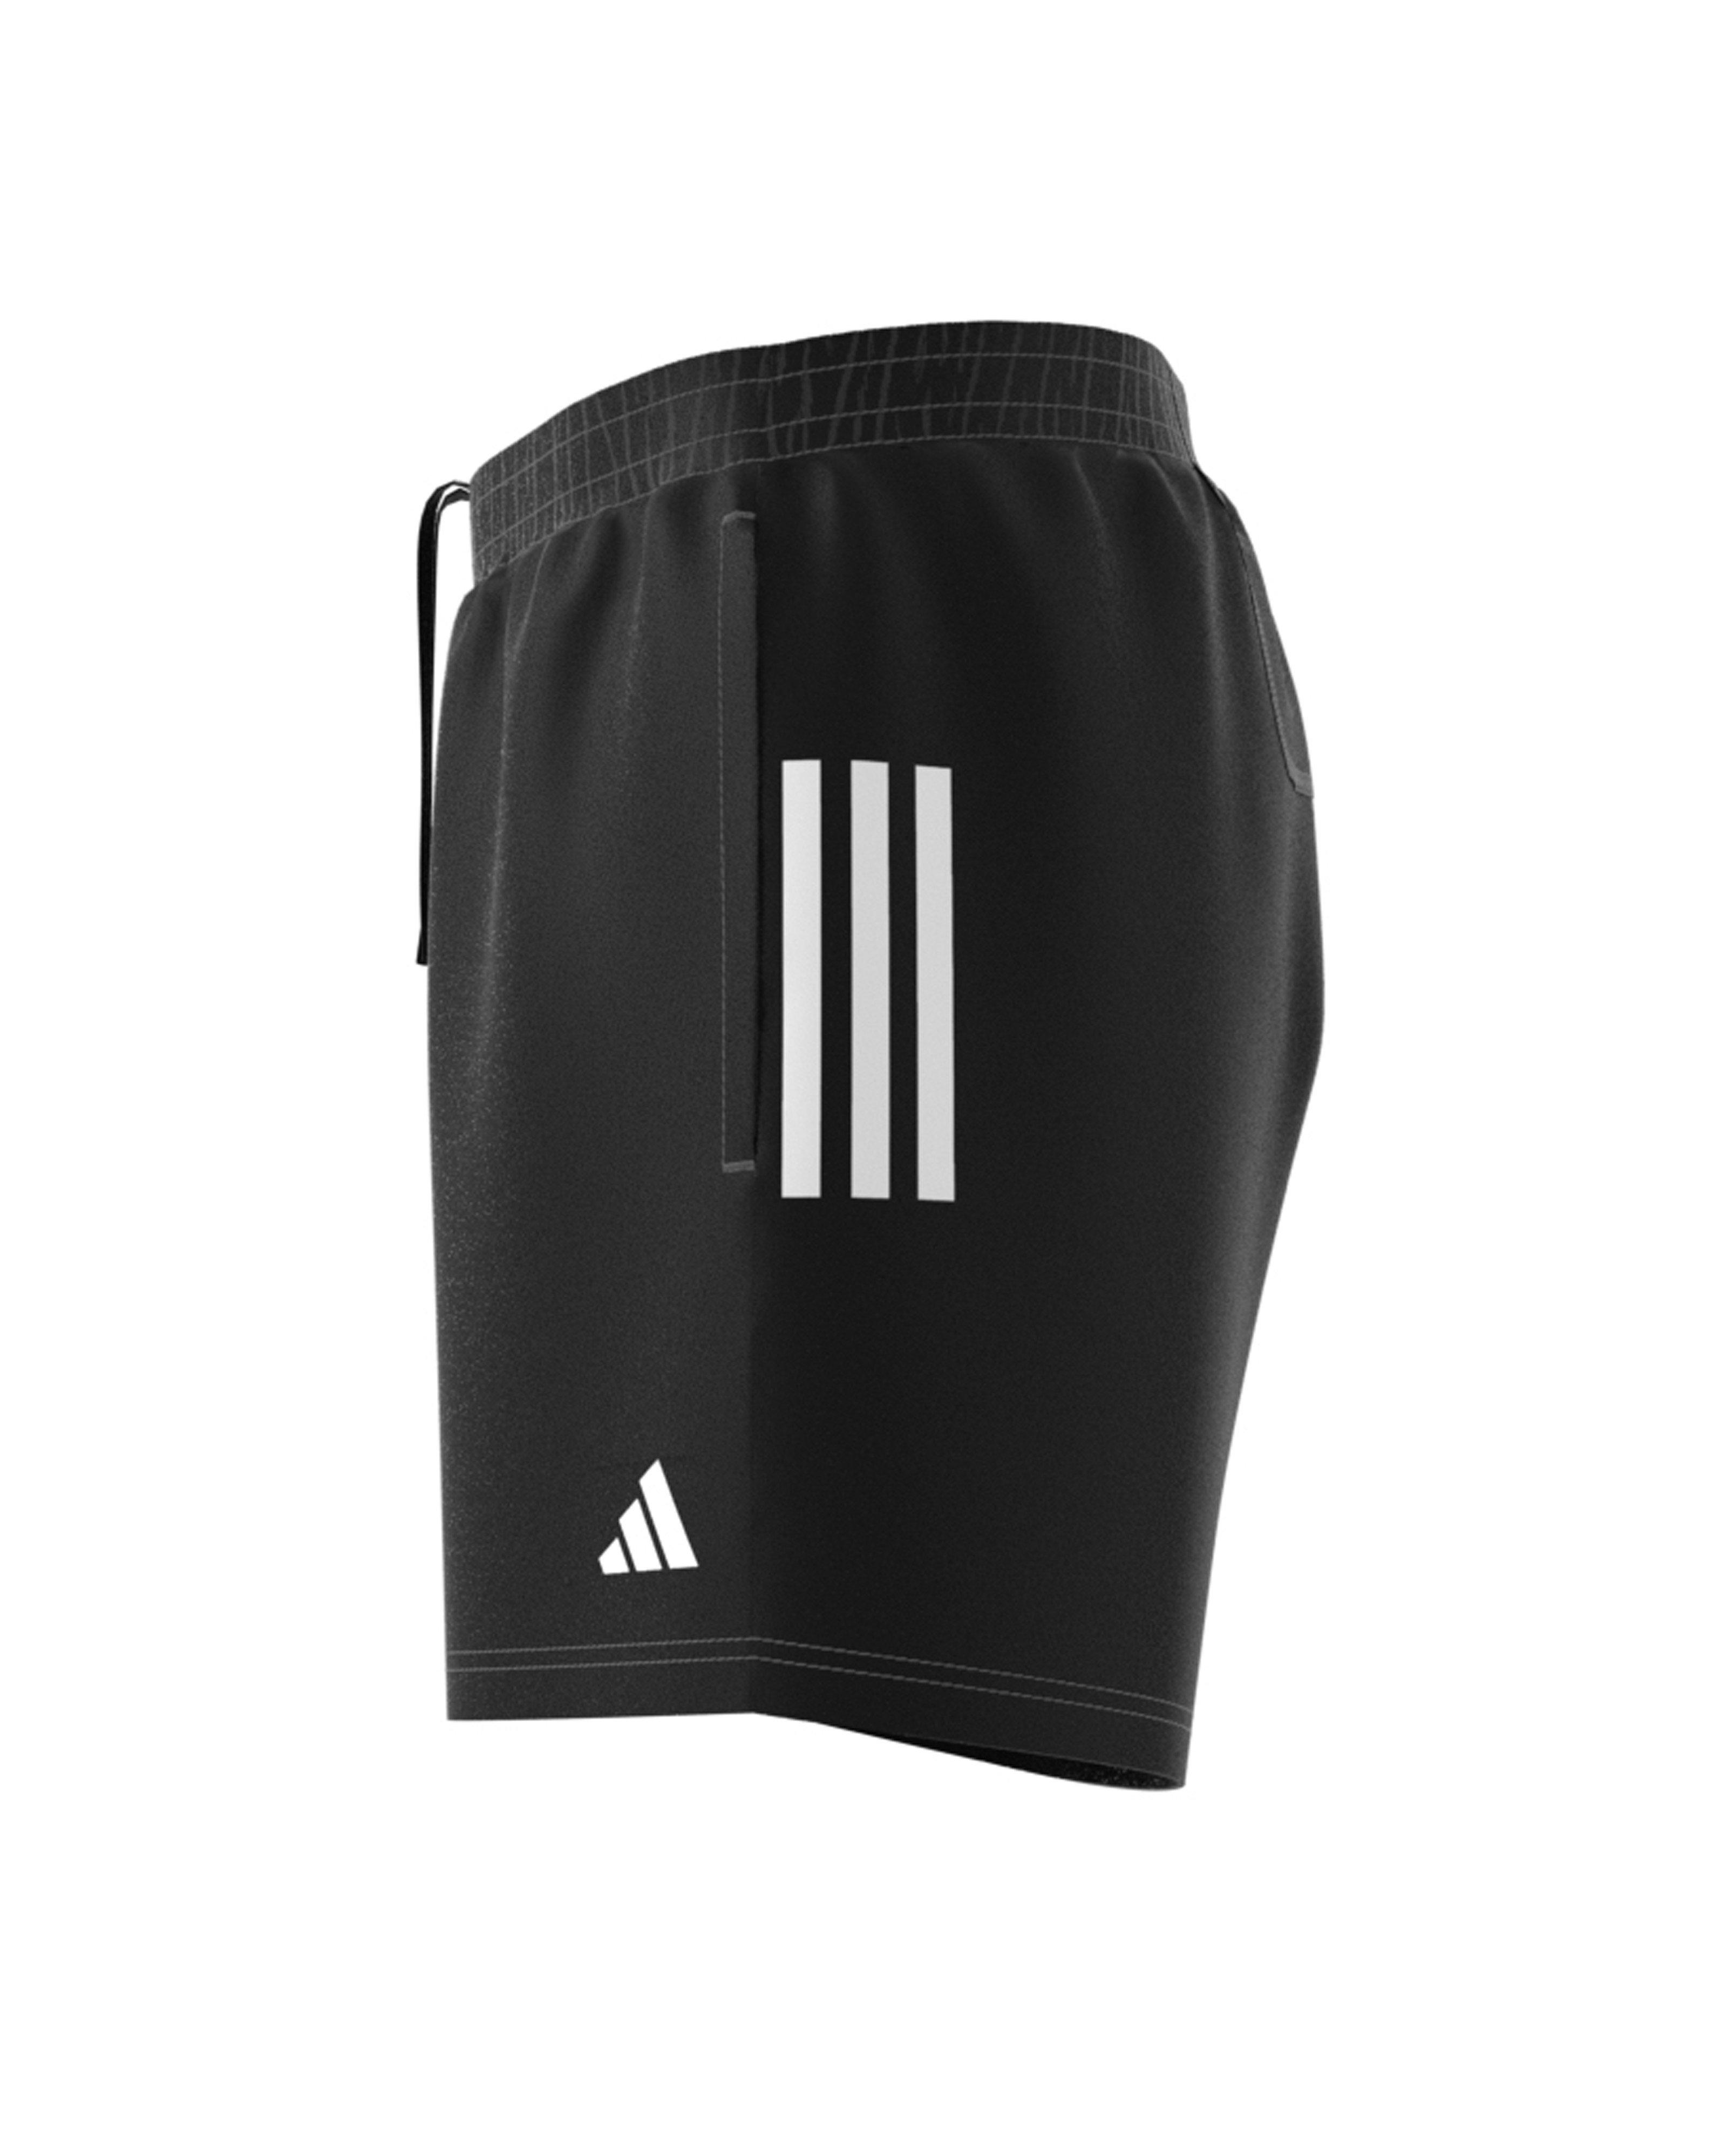 Adidas Men’s OTR B Running Shorts -  Black